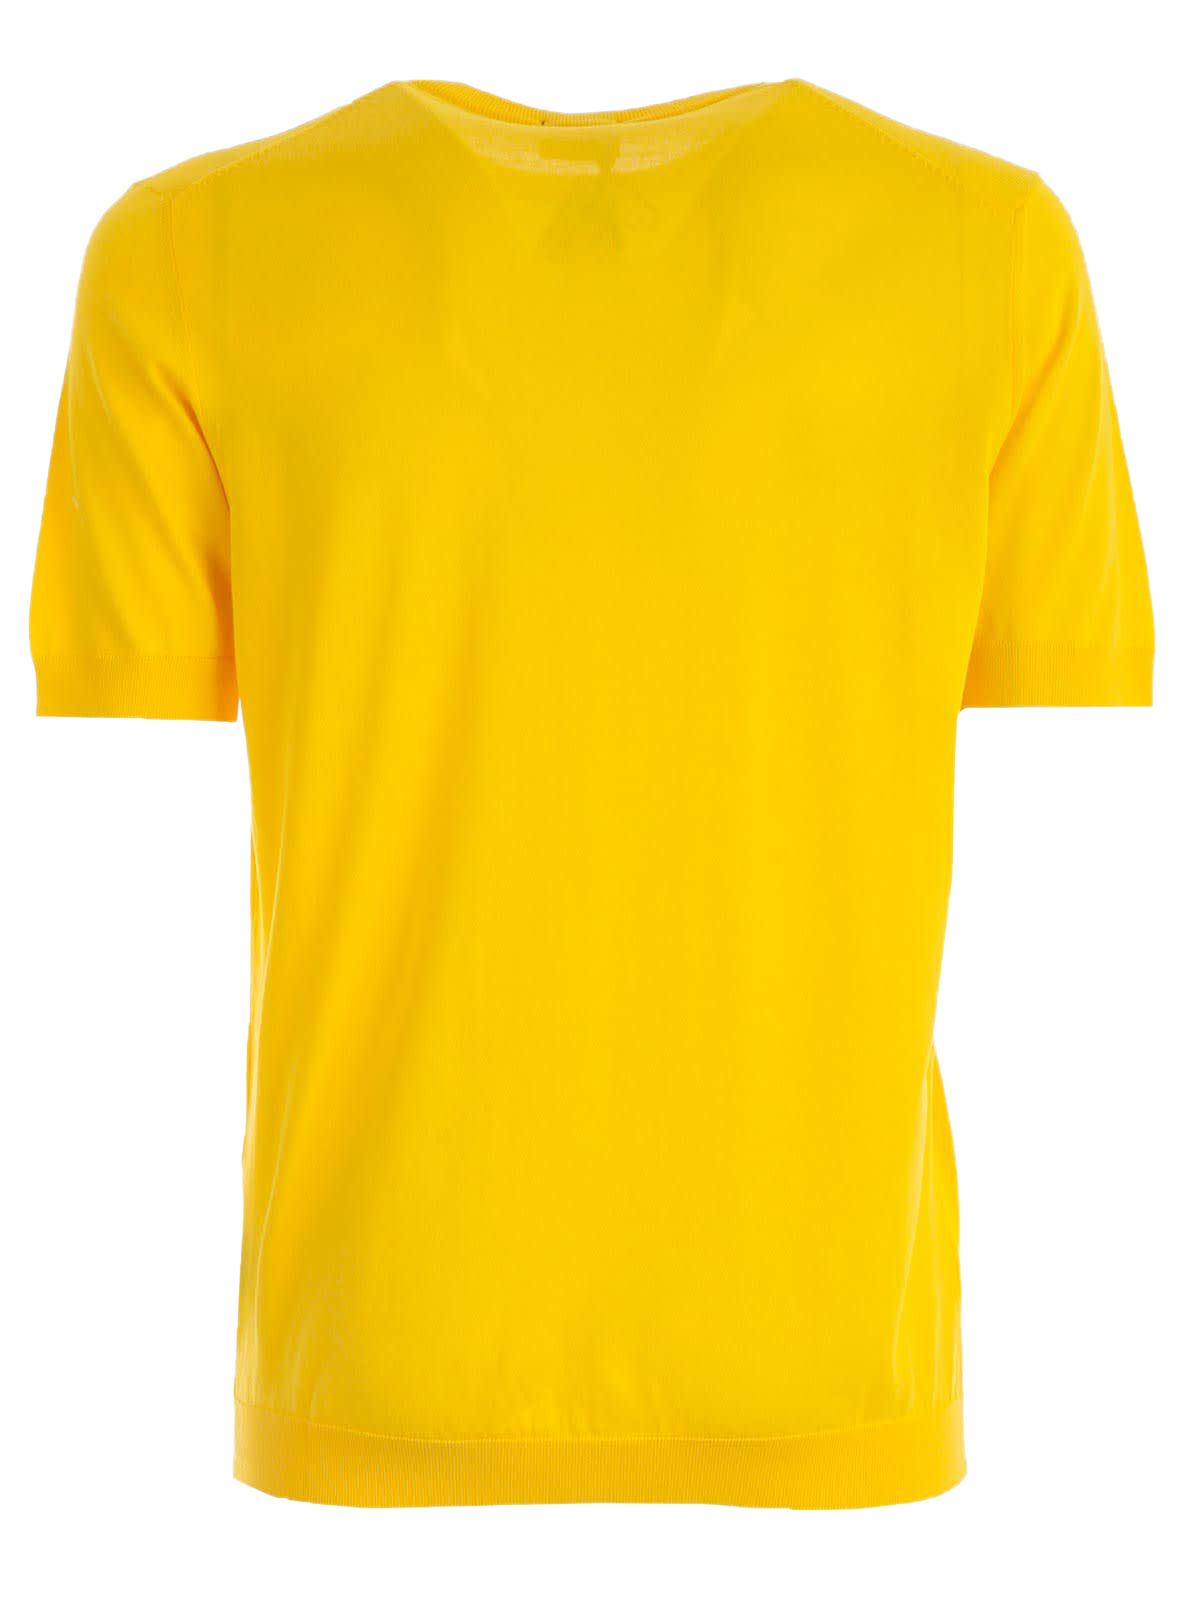 Plain Yellow T-Shirt Transparent Image